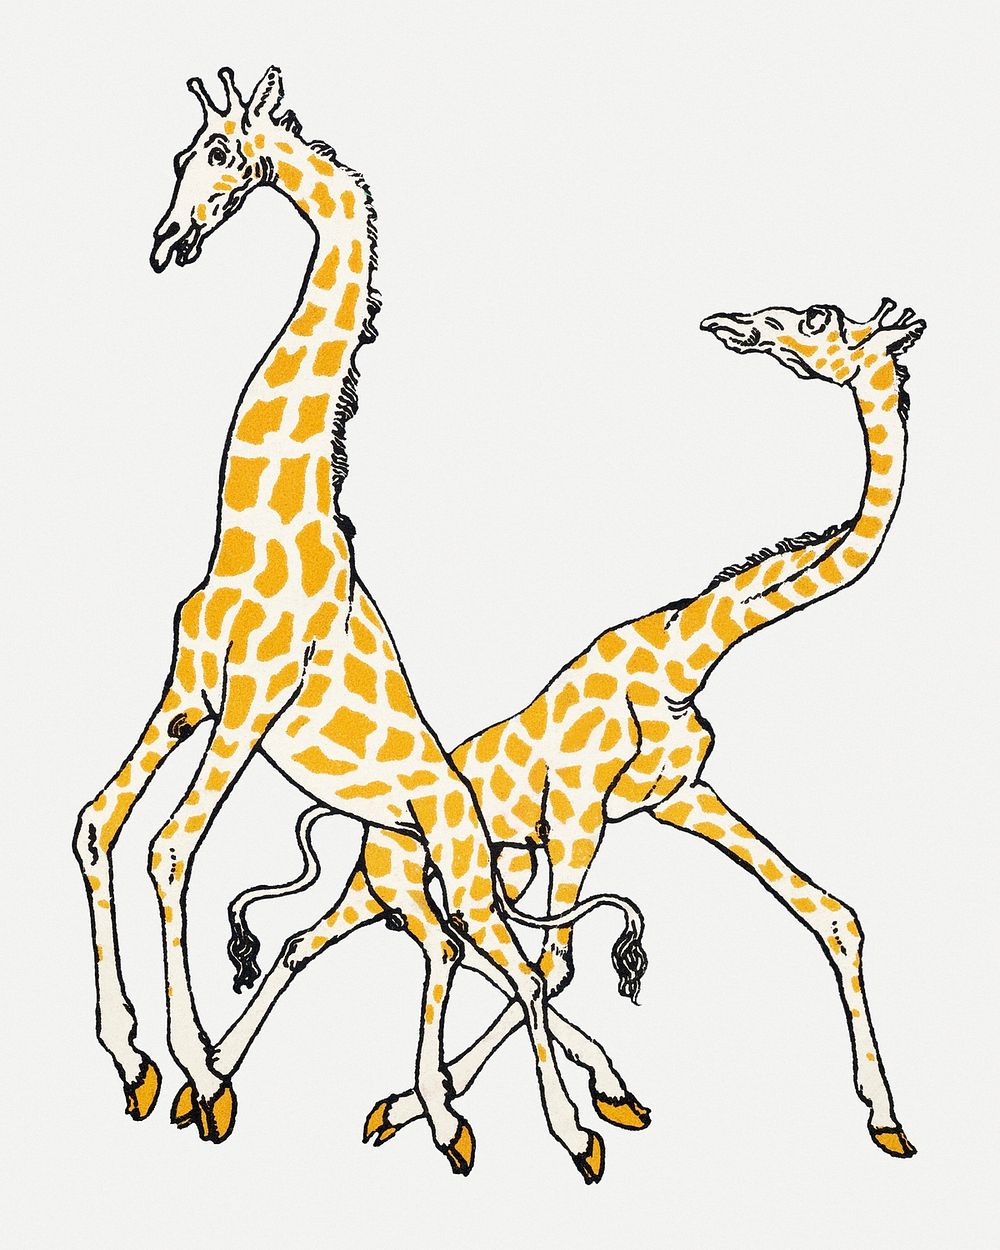 Vintage giraffes illustration psd, remixed from artworks by Moriz Jung